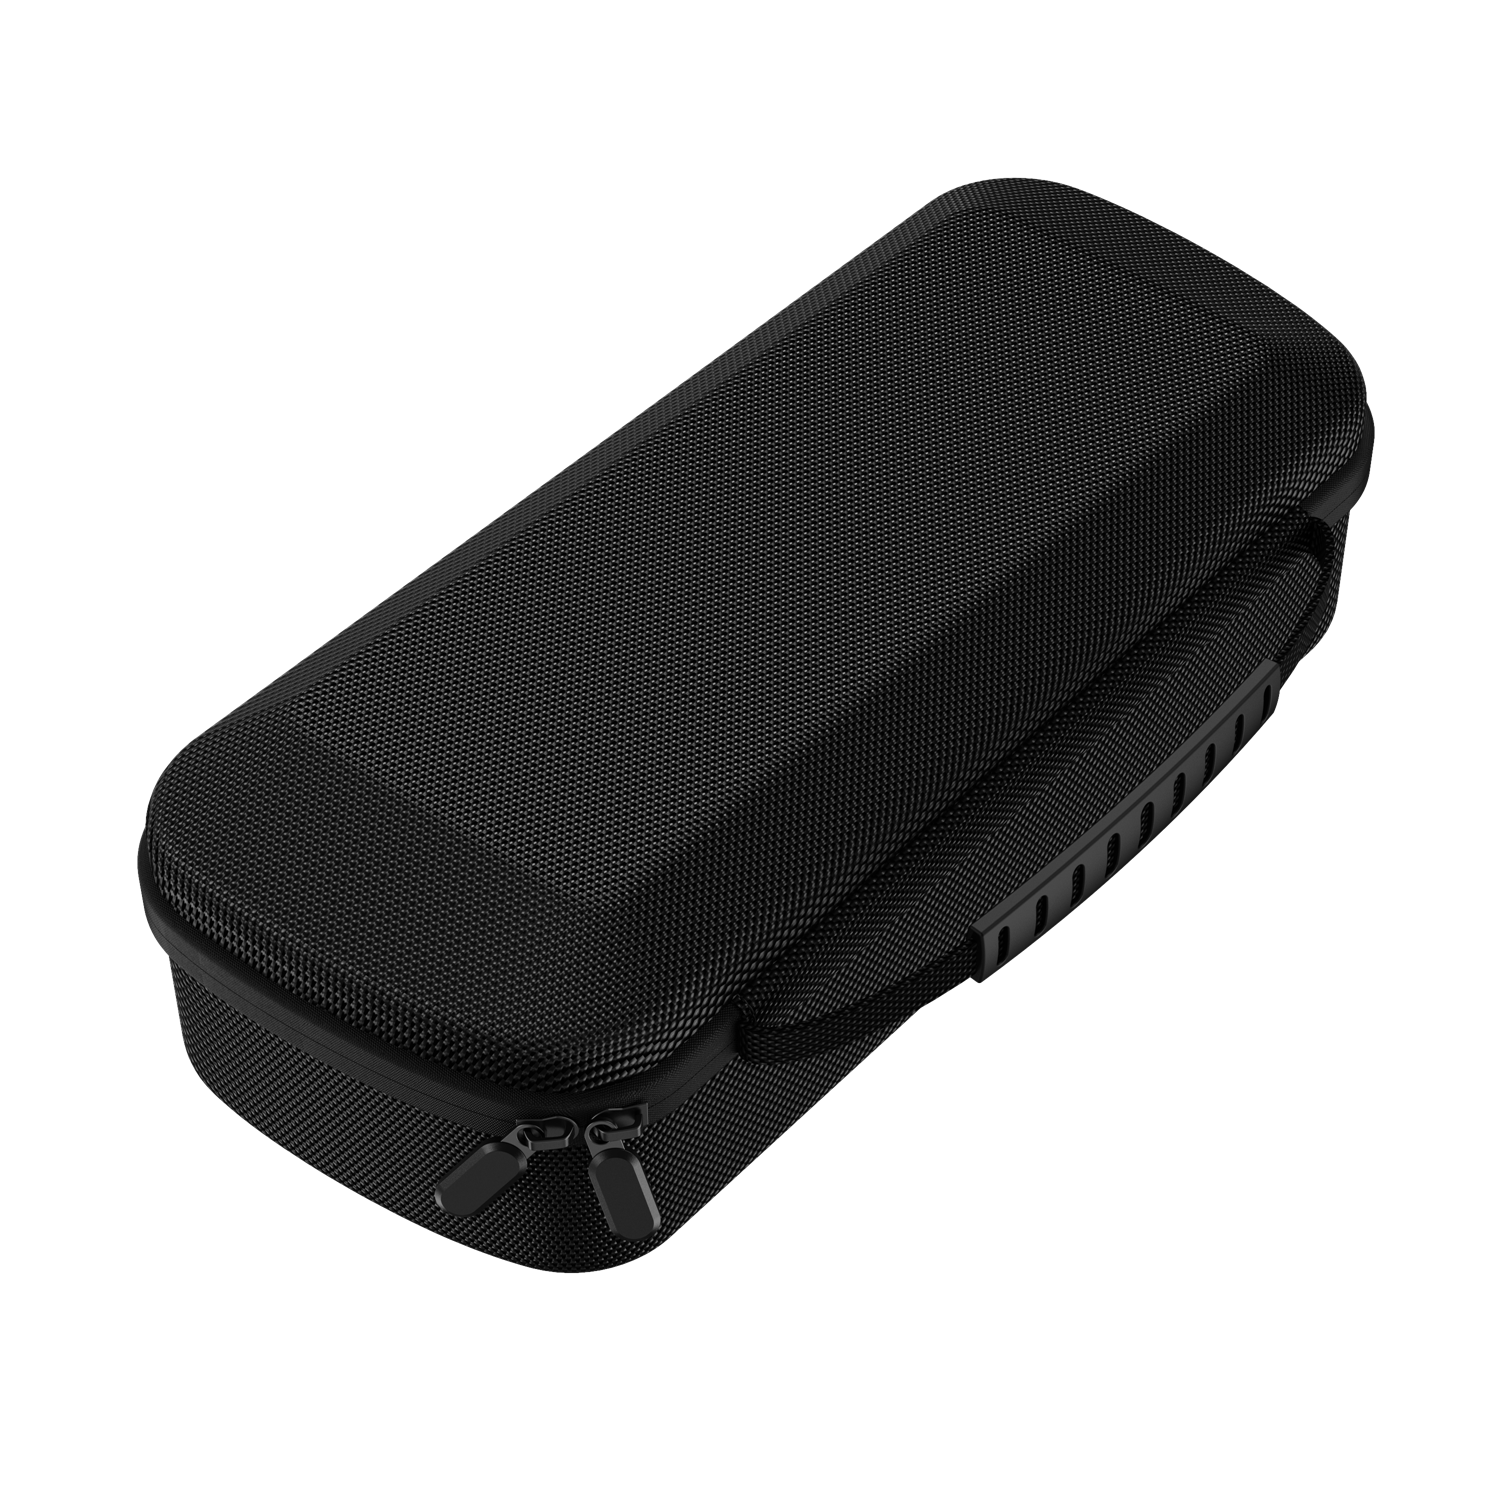 Playstation Portal Carry case